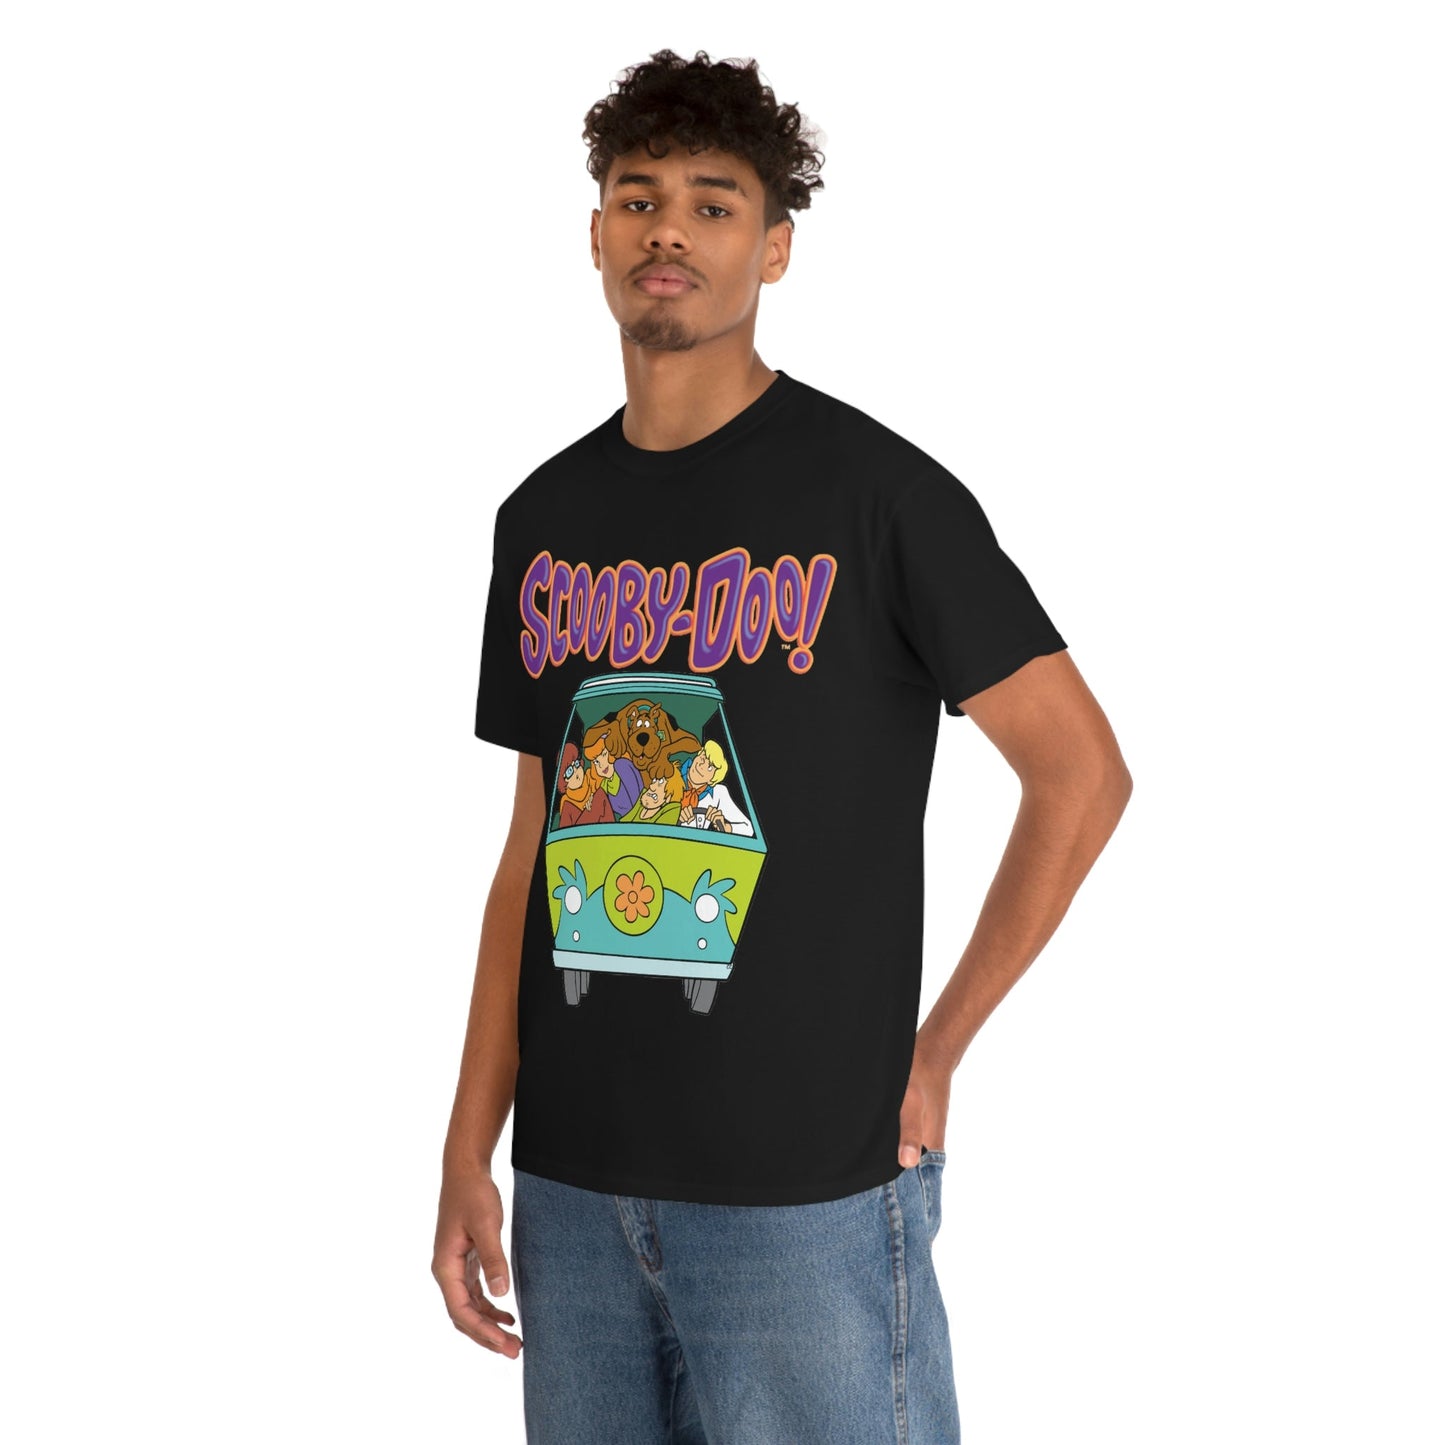 Scooby Doo Mystery Machine T-shirt - RetroTeeShop